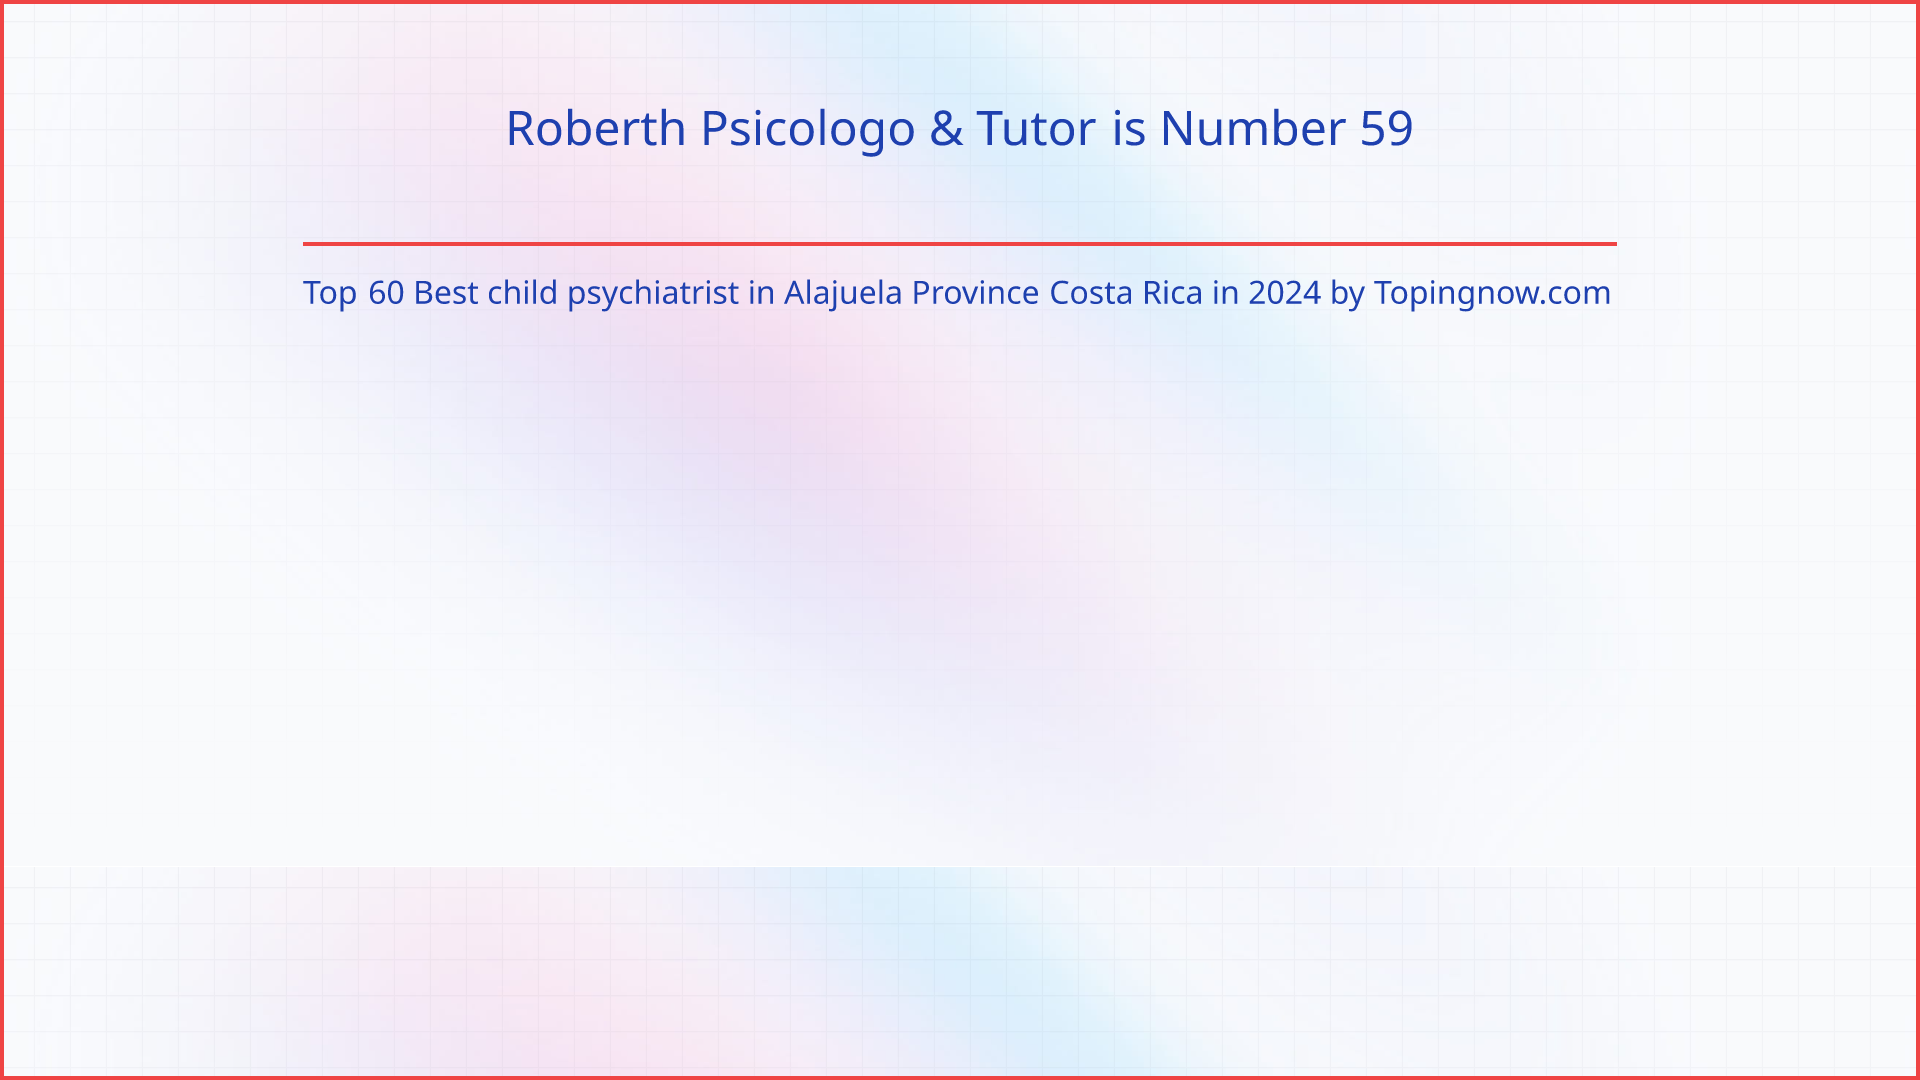 Roberth Psicologo & Tutor: Top 60 Best child psychiatrist in Alajuela Province Costa Rica in 2024